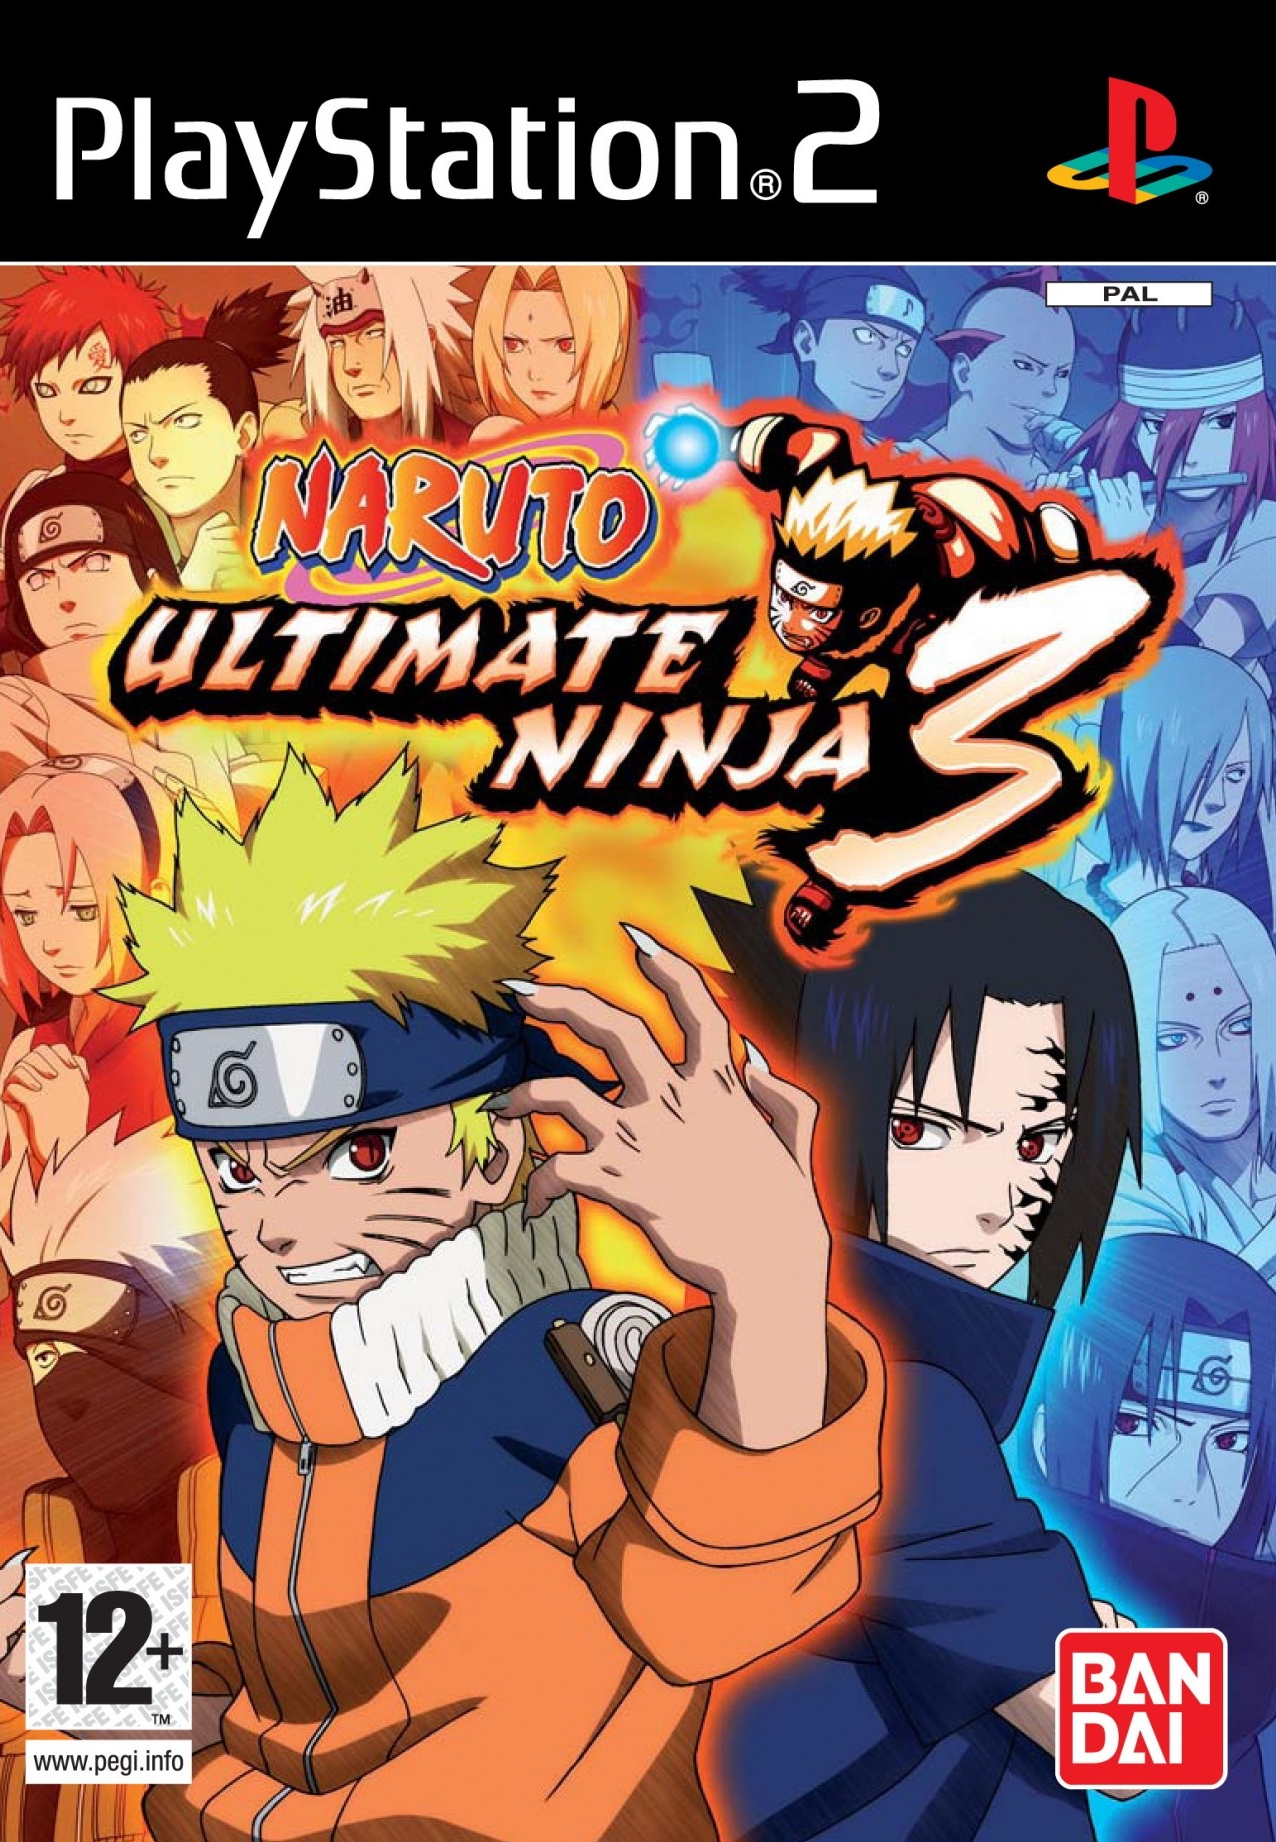 Naruto Ultimate Ninja 3 (Német) - PlayStation 2 Játékok